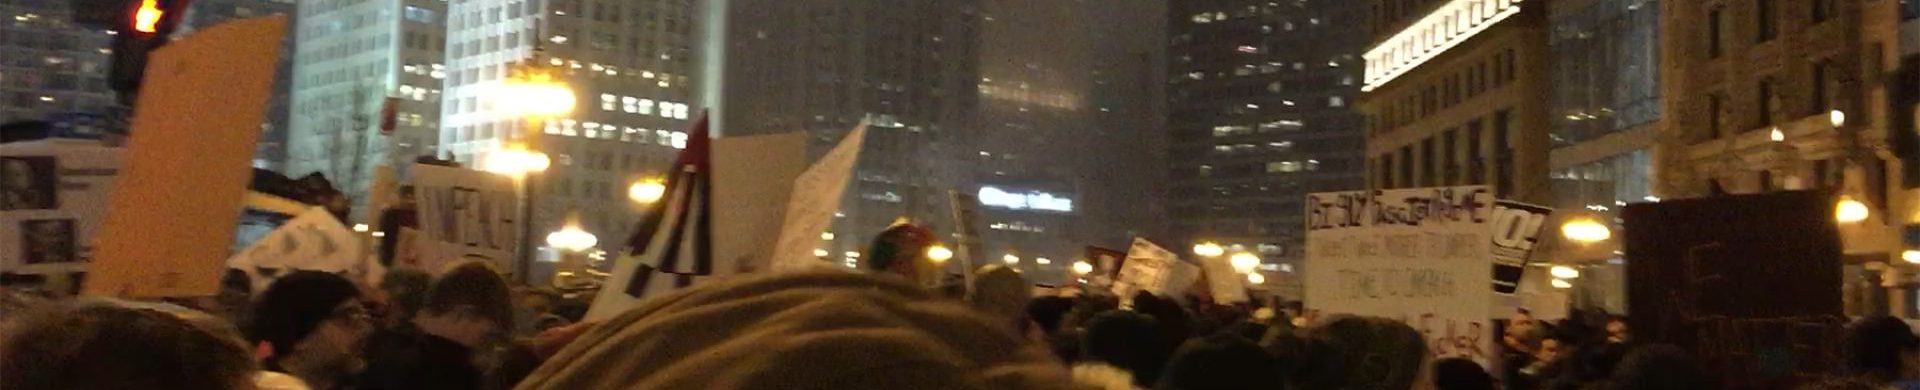 Protest Chicago